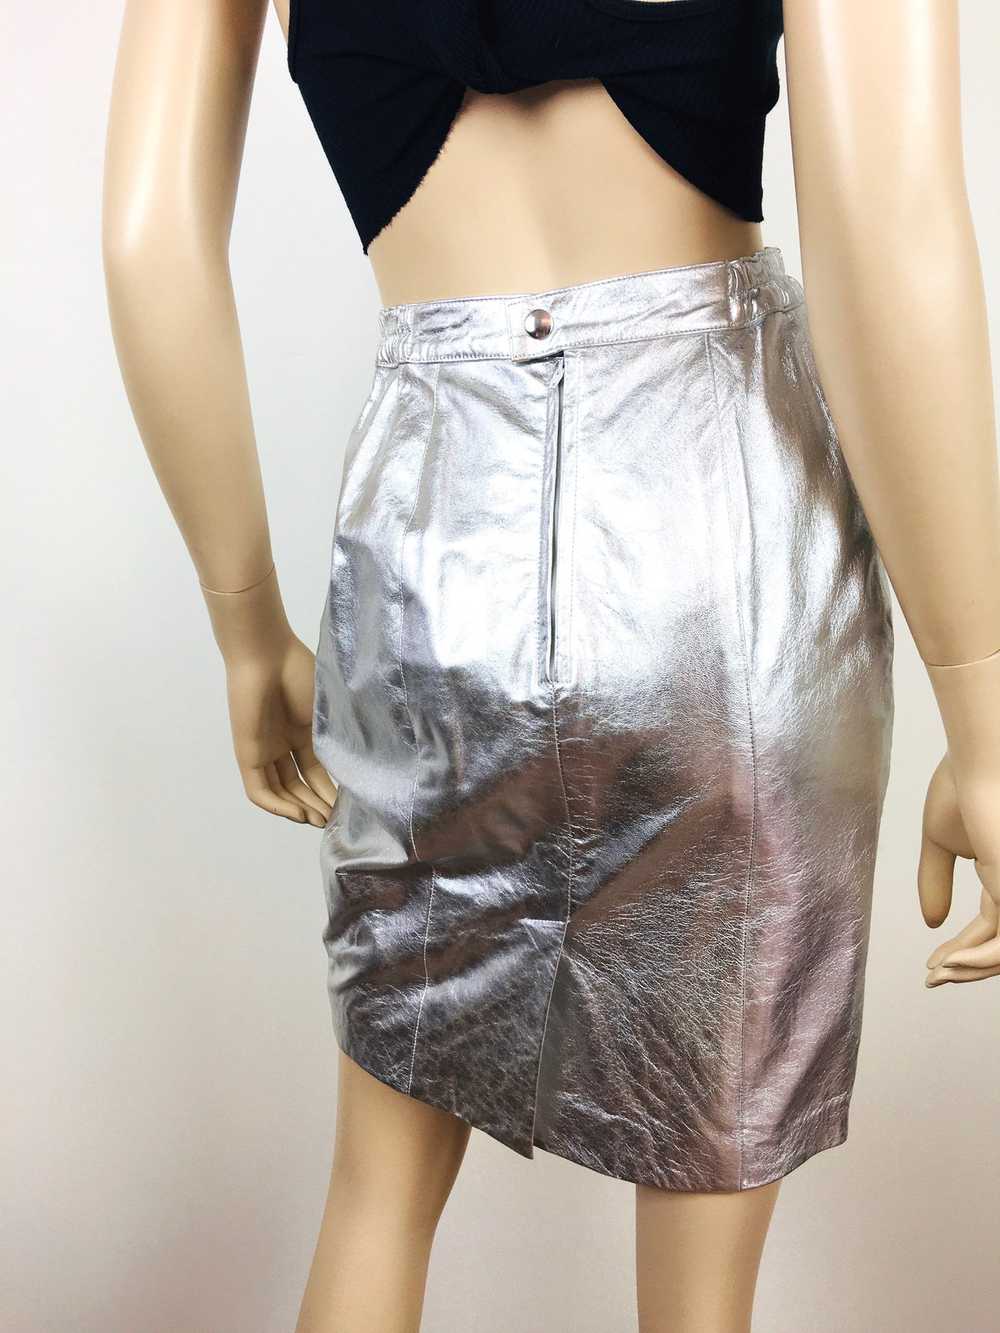 Vintage 1980s Silver Metallic Lame Leather Skirt - image 4